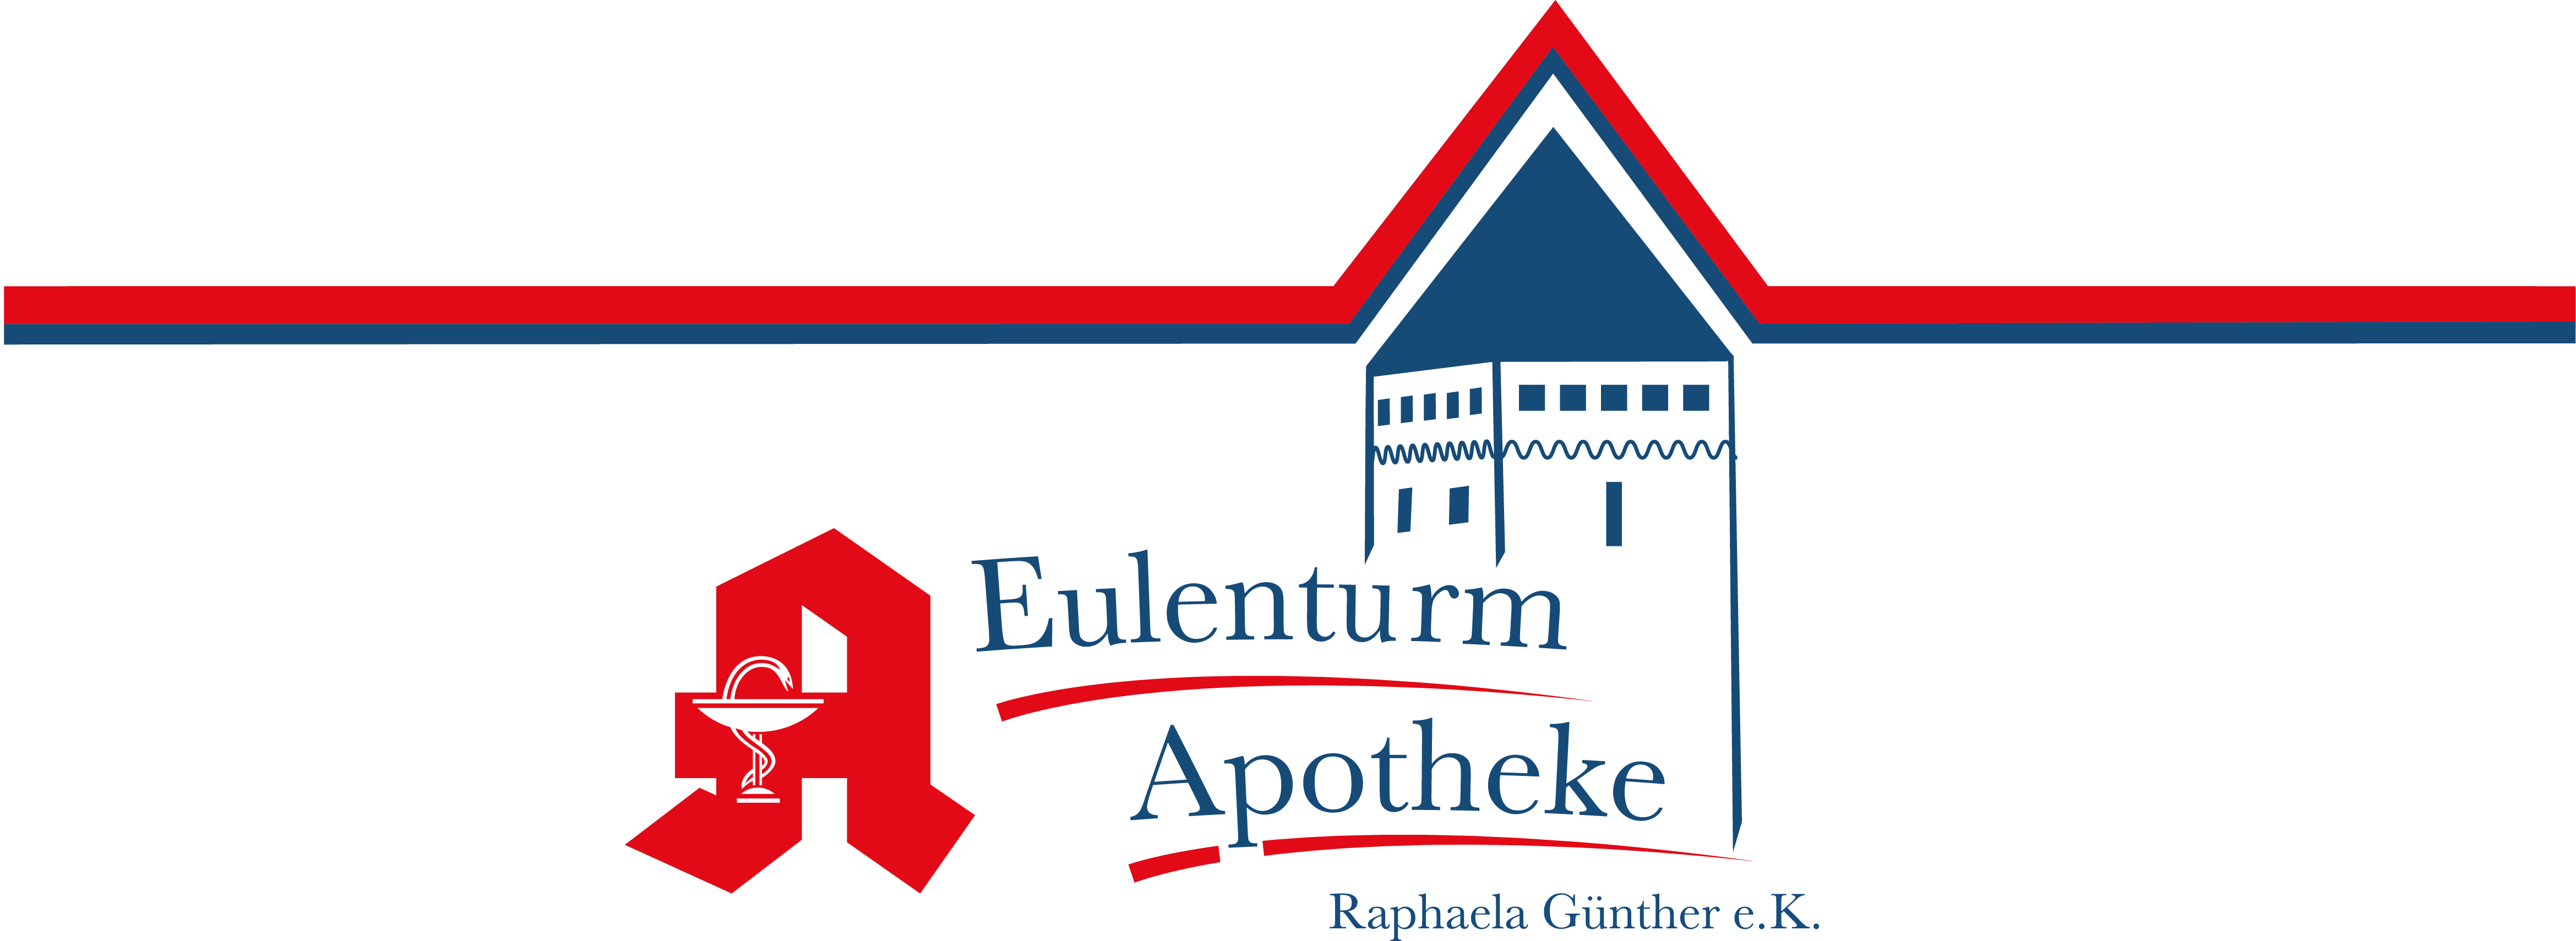 Eulenthurm-Apotheke-Weißenthurm